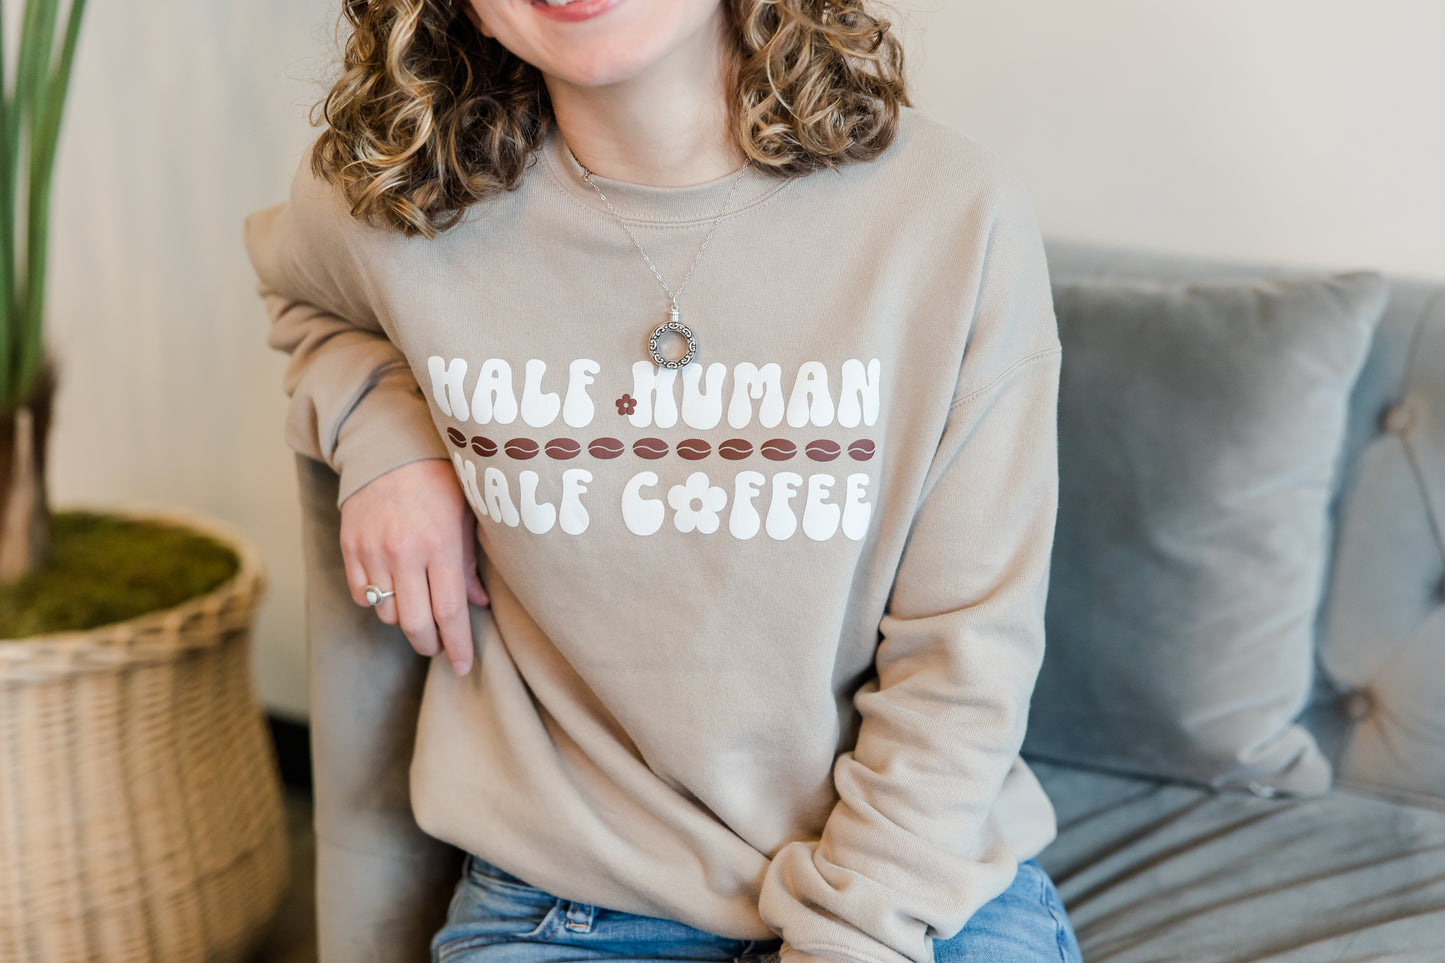 Cozy Tan Crewneck Boho Sweatshirt Half Human Half Coffee